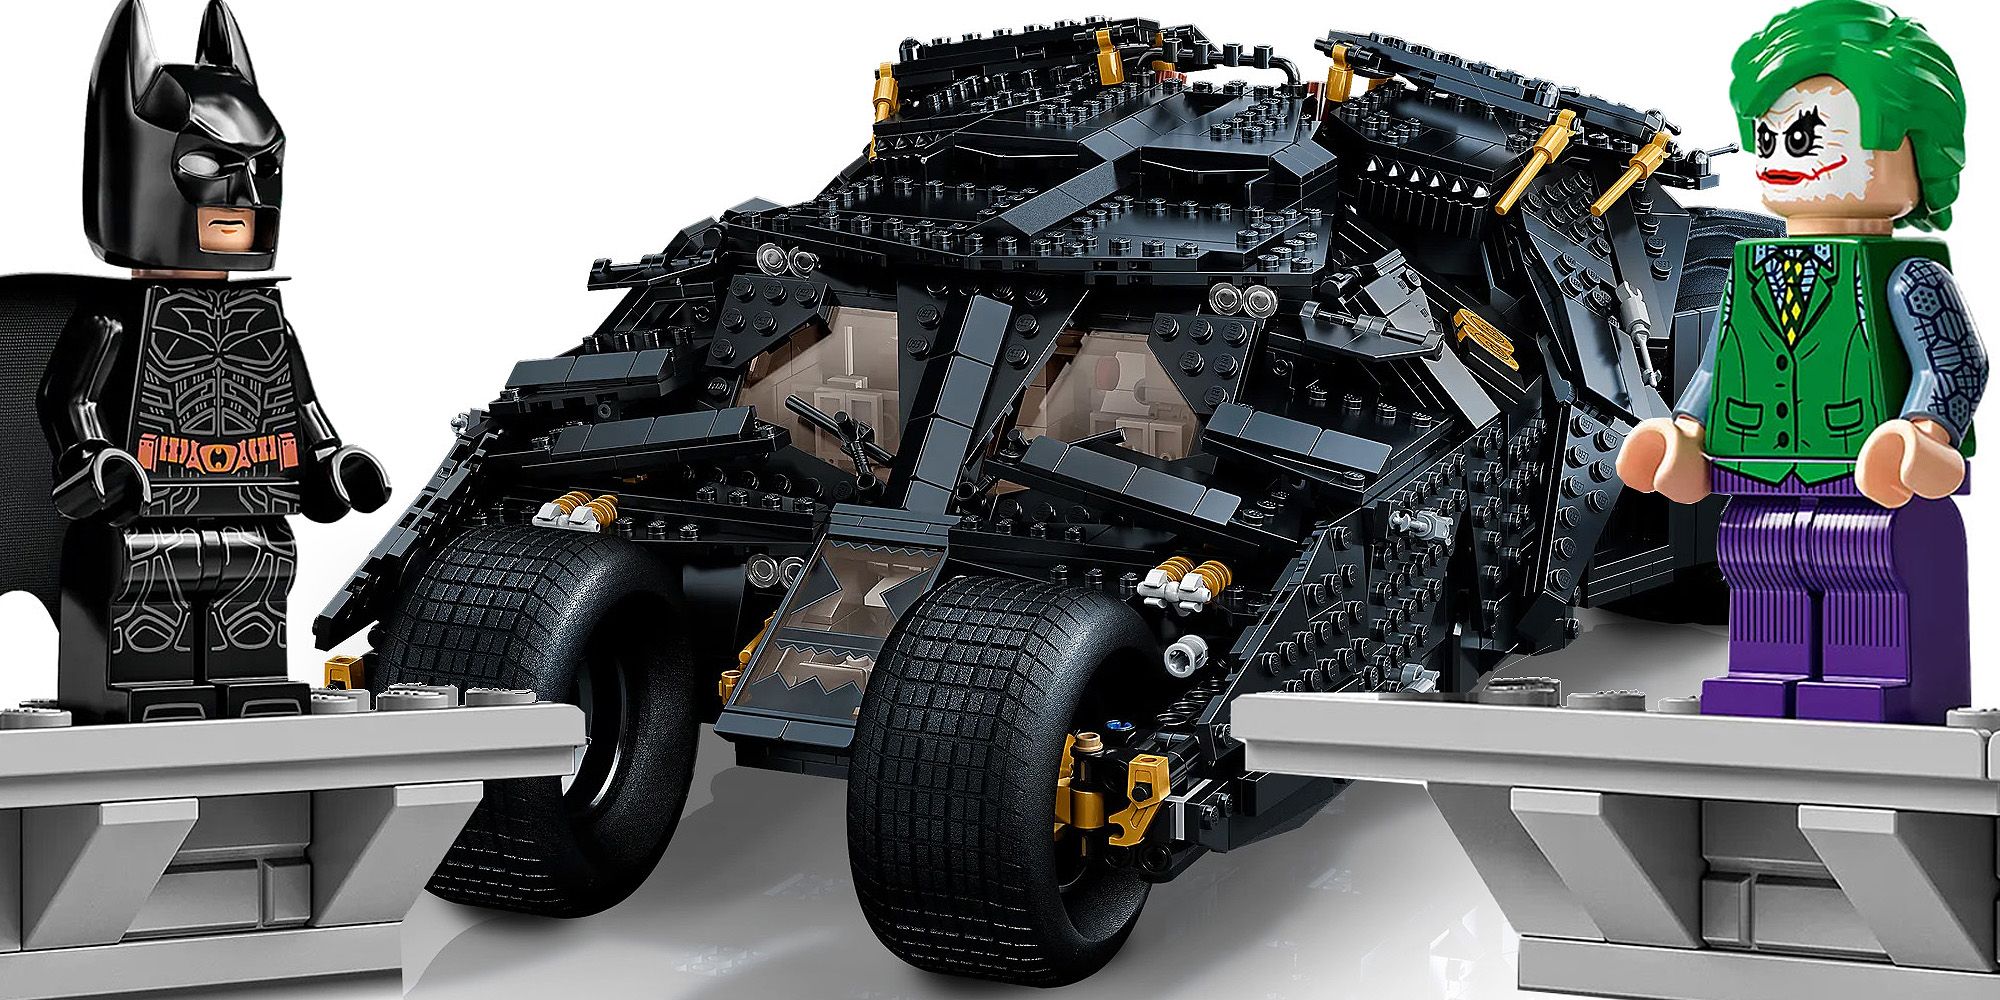 Roble abogado Bloquear Dark Knight Batmobile LEGO Set With 2000+ Pieces Available for Pre-Order